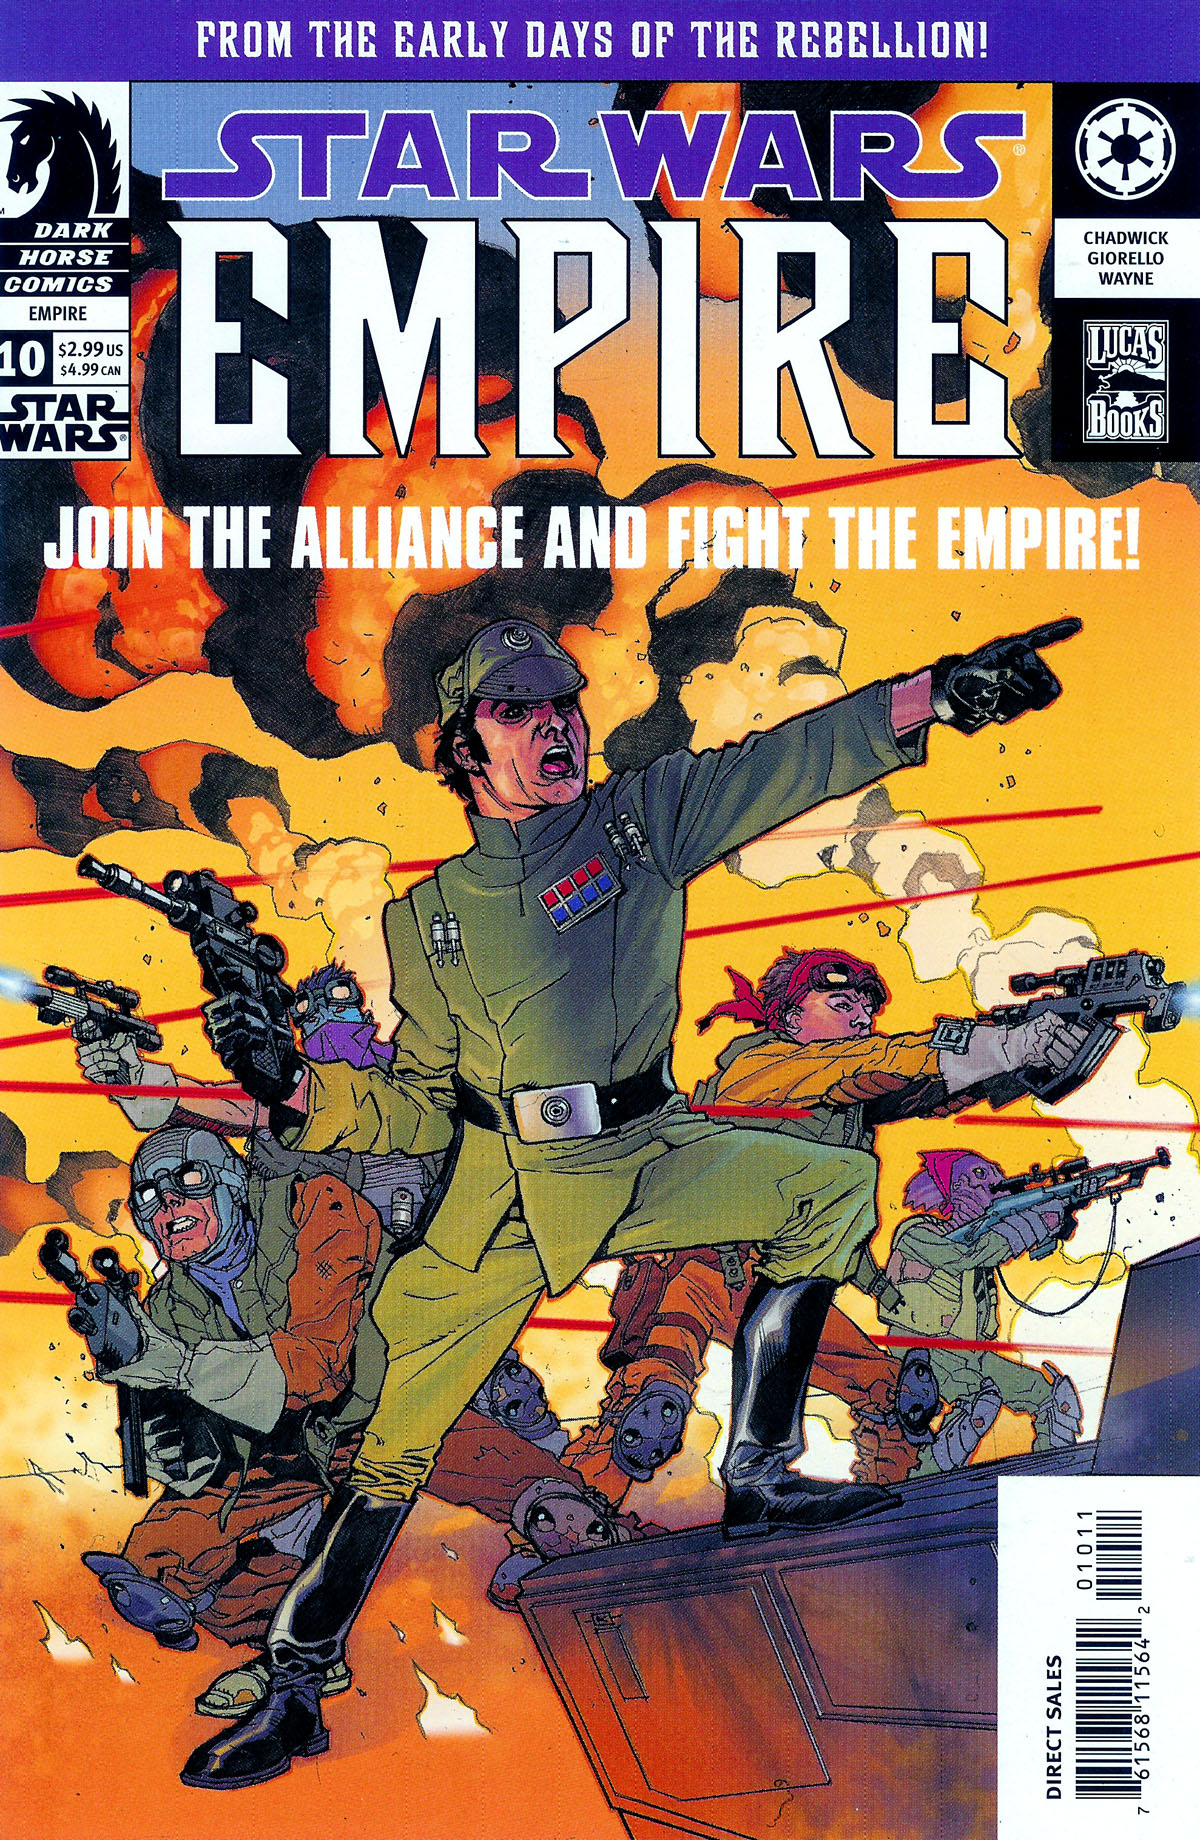 Plik:Empire10.jpg